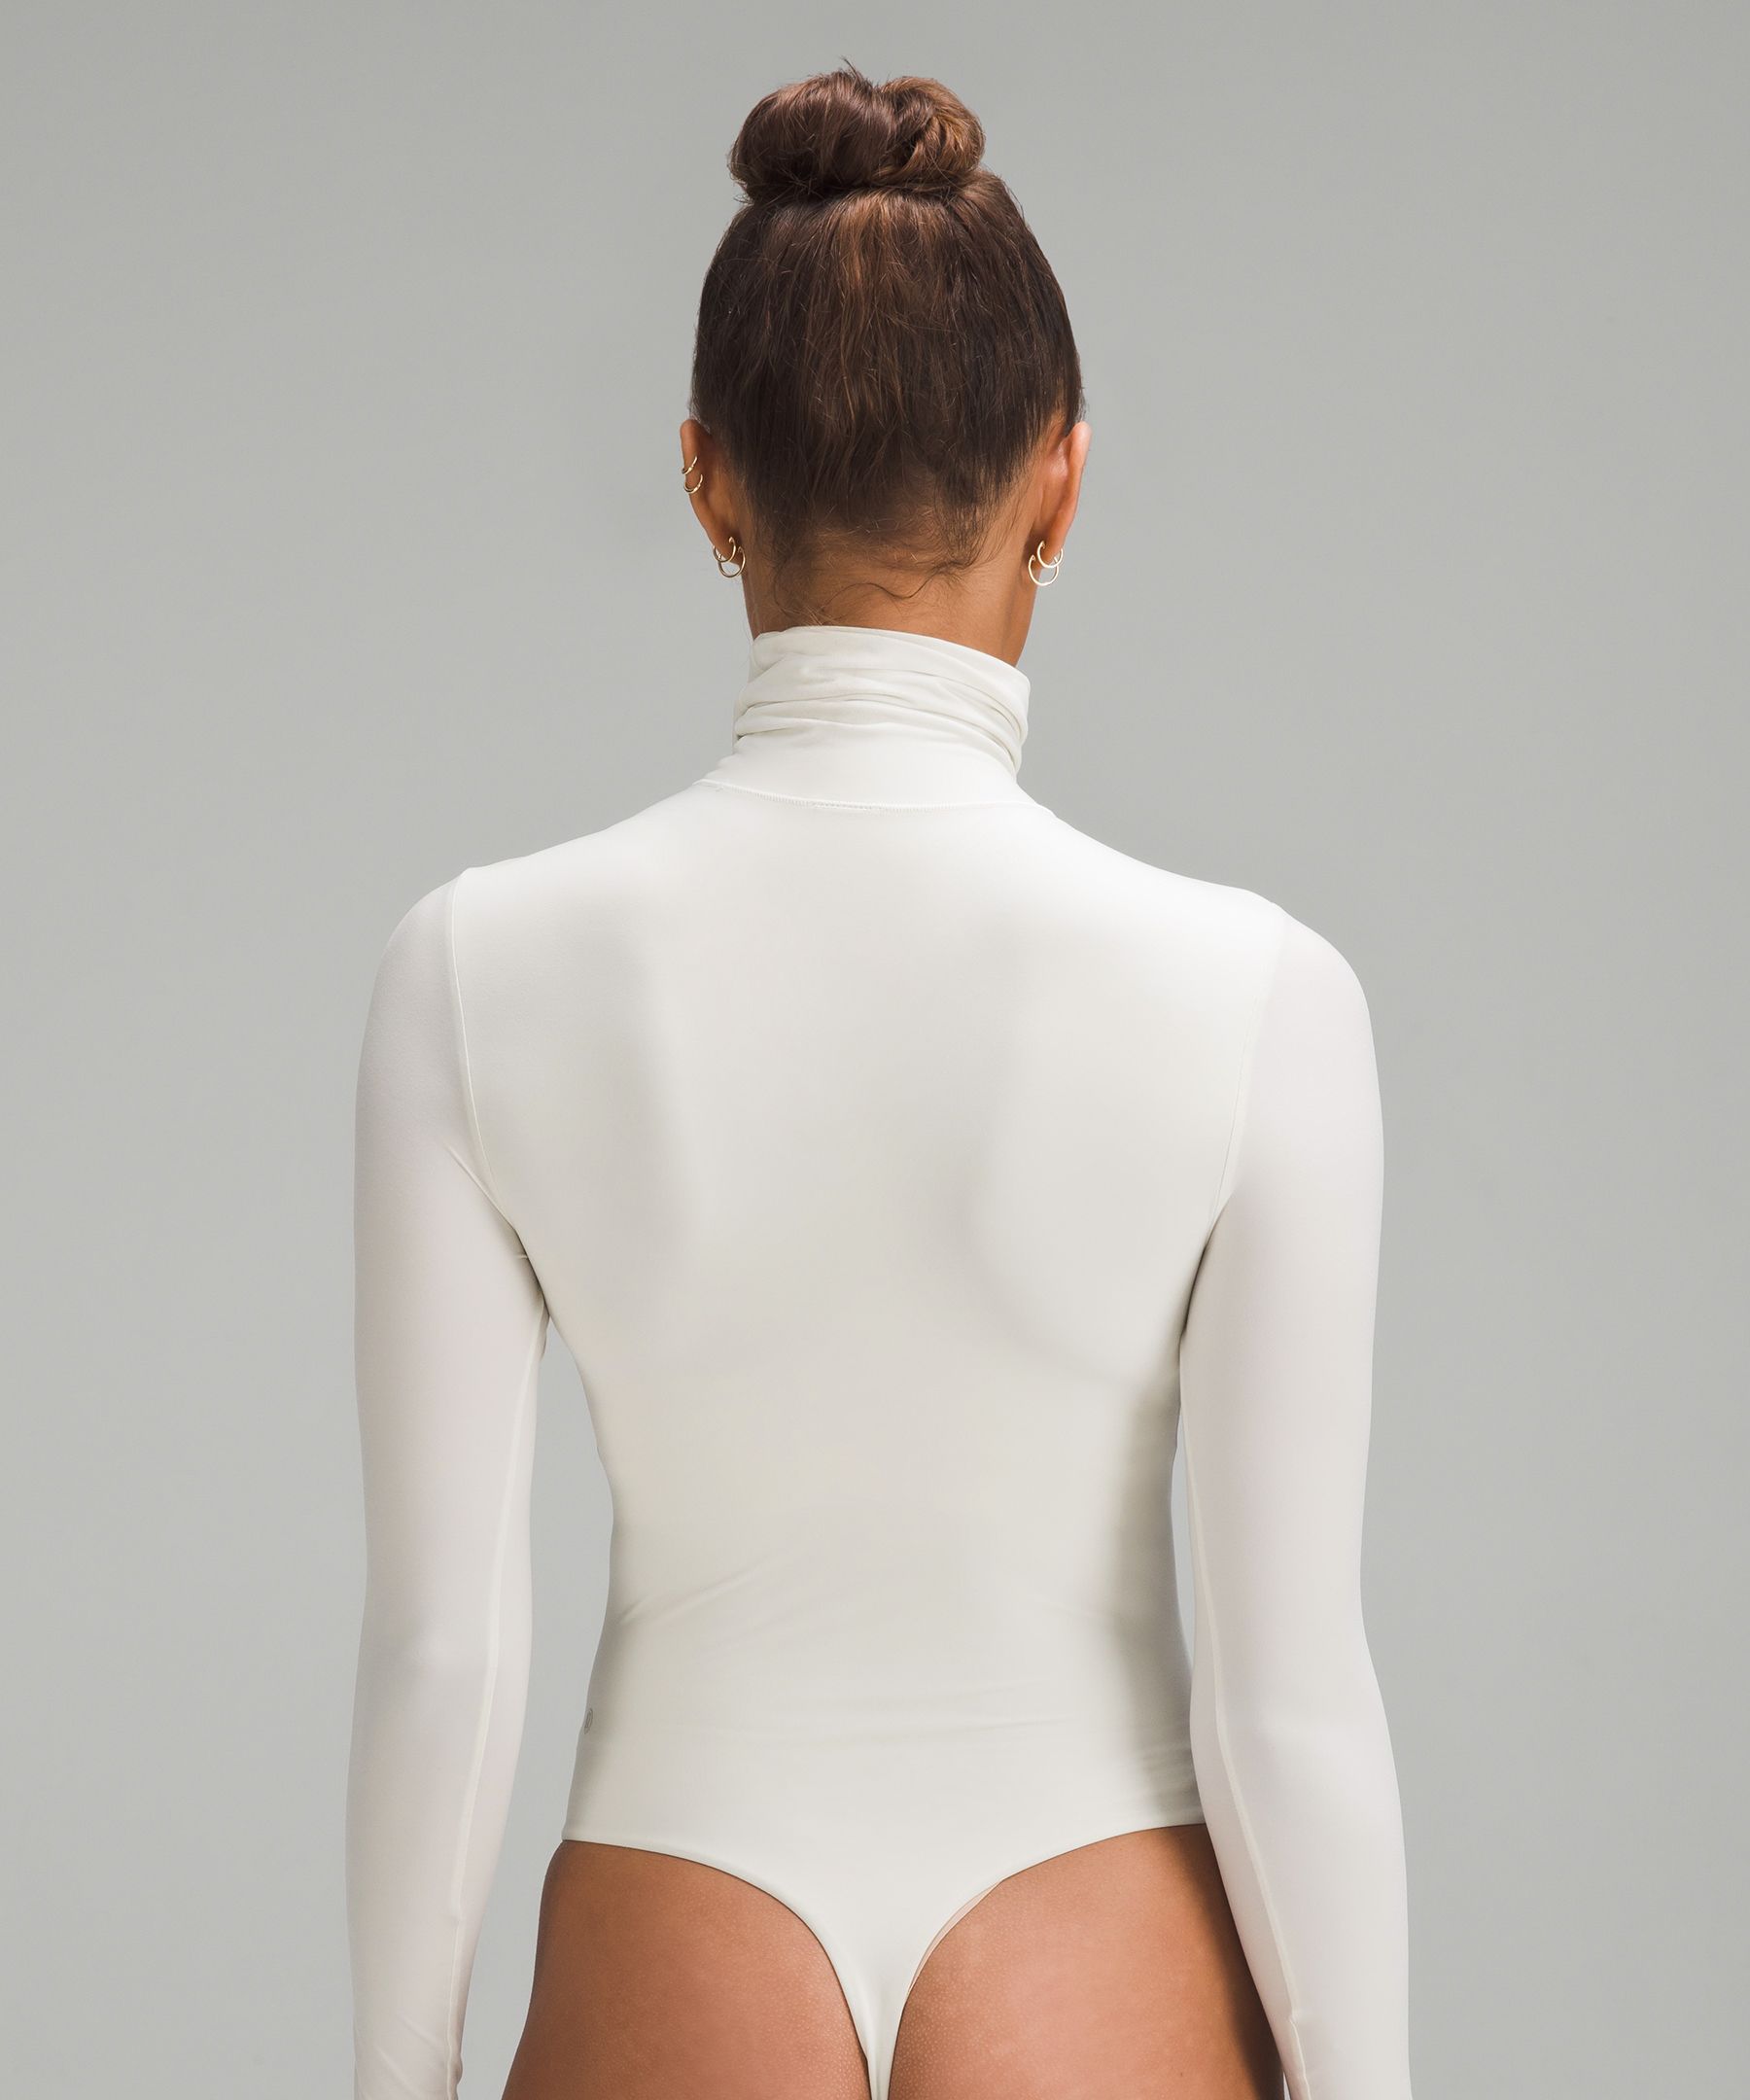 Luxurious long sleeve turtleneck bodysuit made from Italian yarn